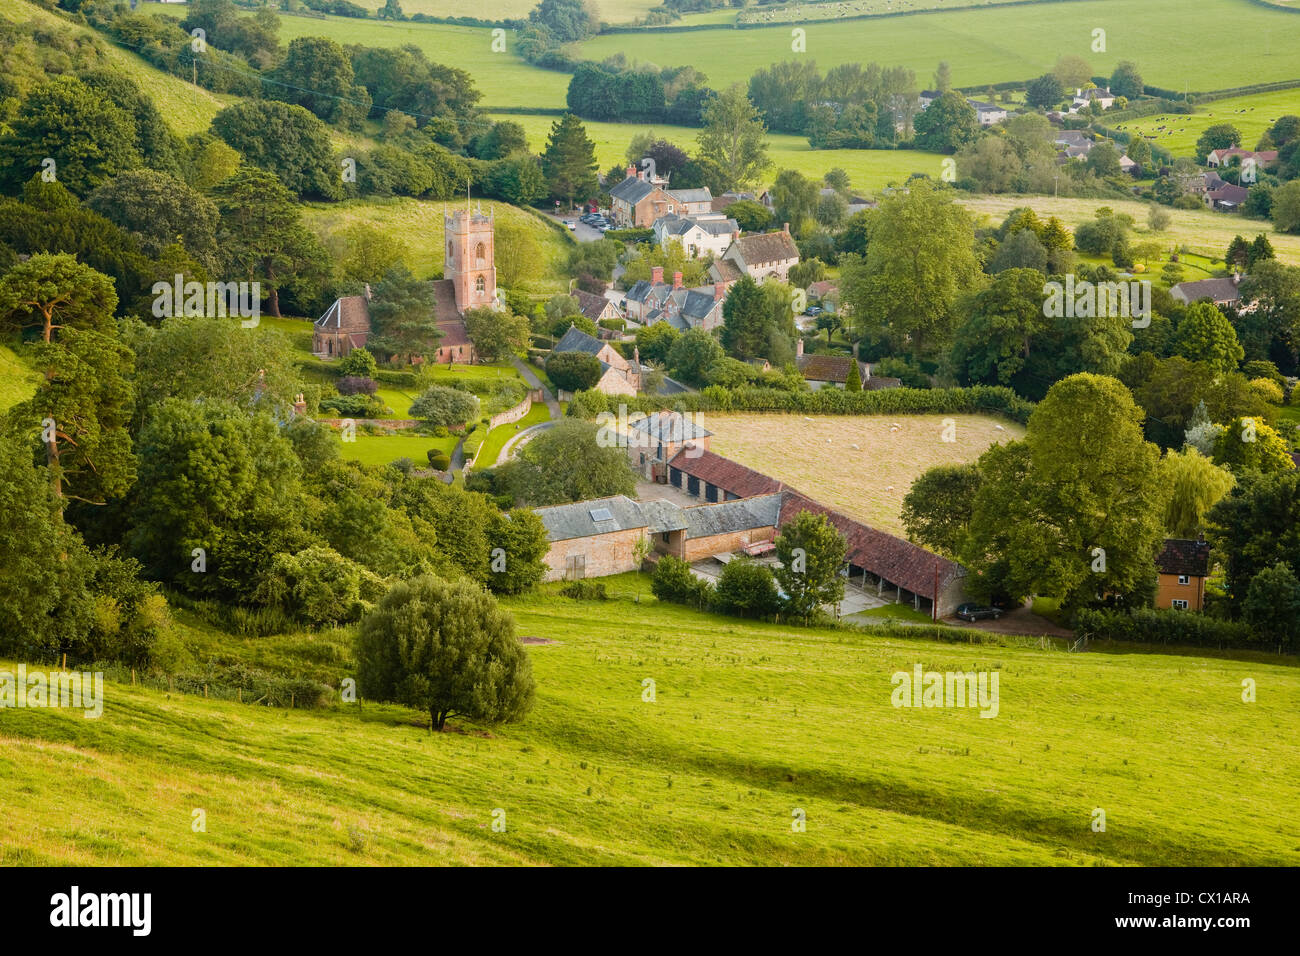 The village of Corton Denham in Somerset. Stock Photo